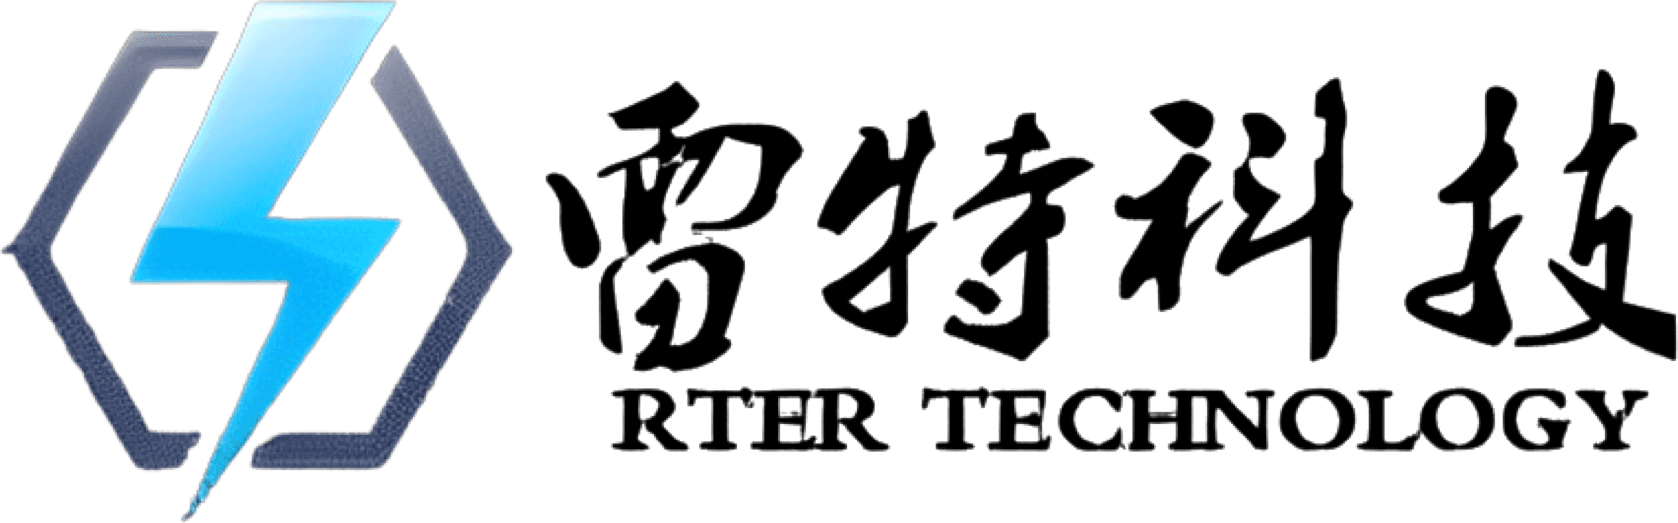 RTER Technology